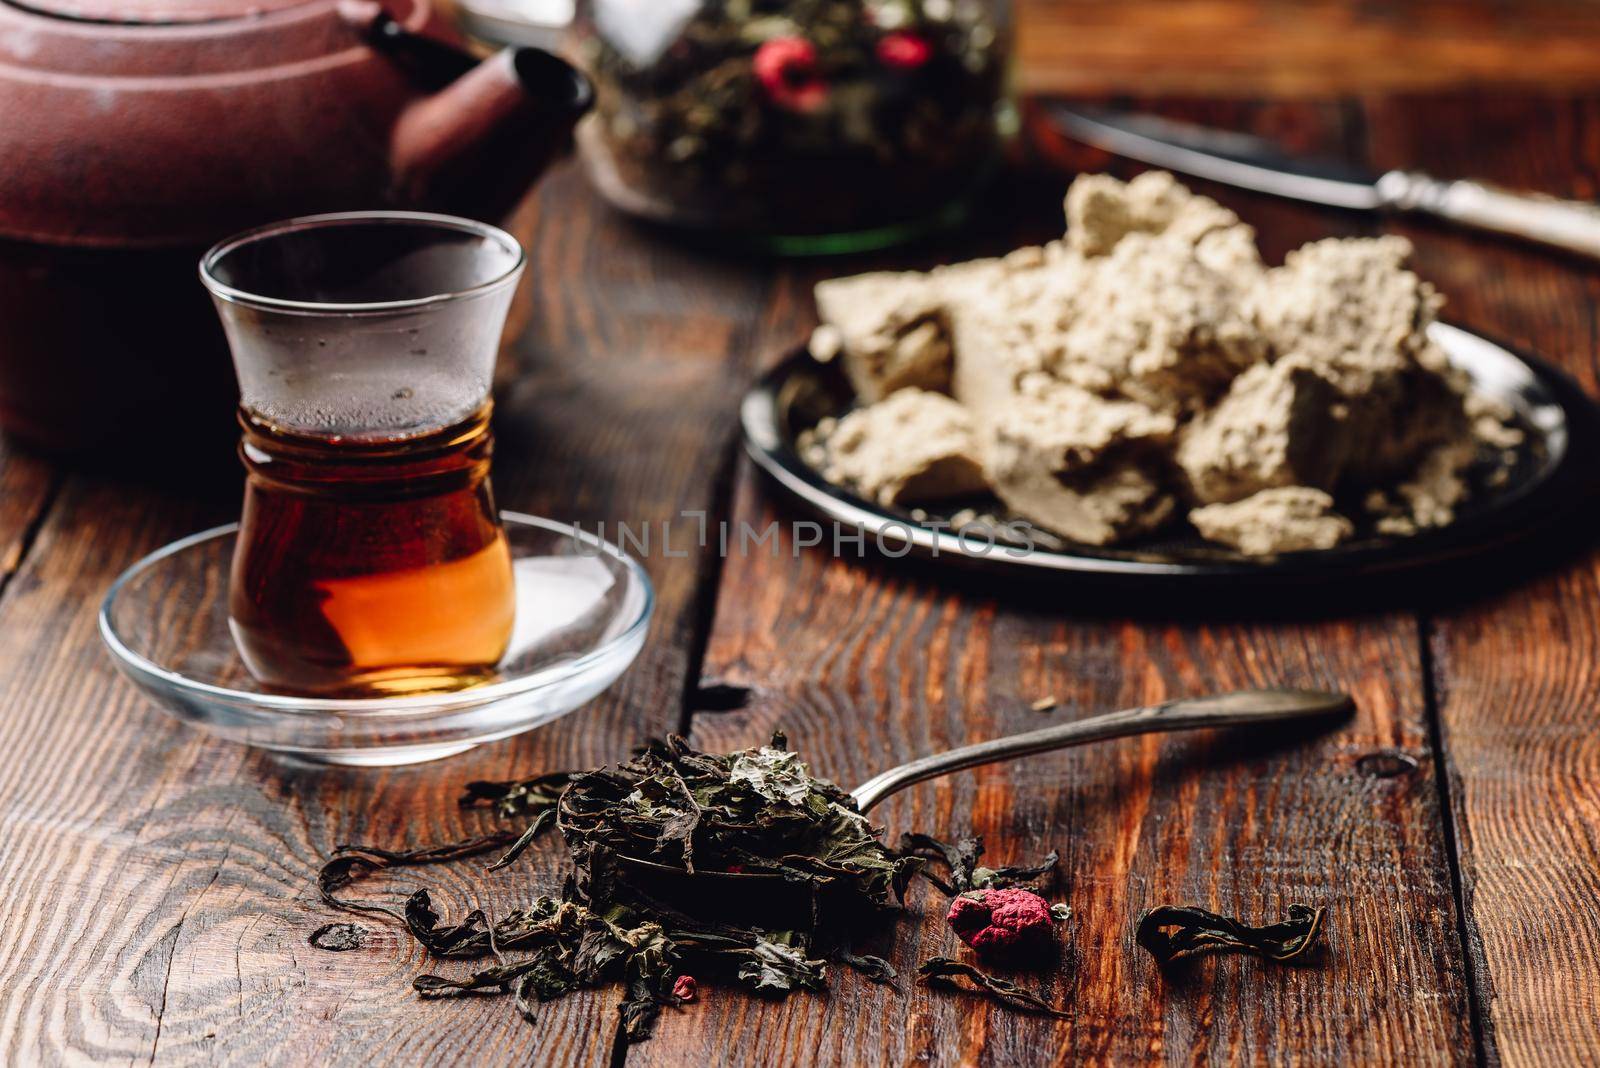 Spoonful of raspberry herbal tea and ready tea in armudu glass by Seva_blsv